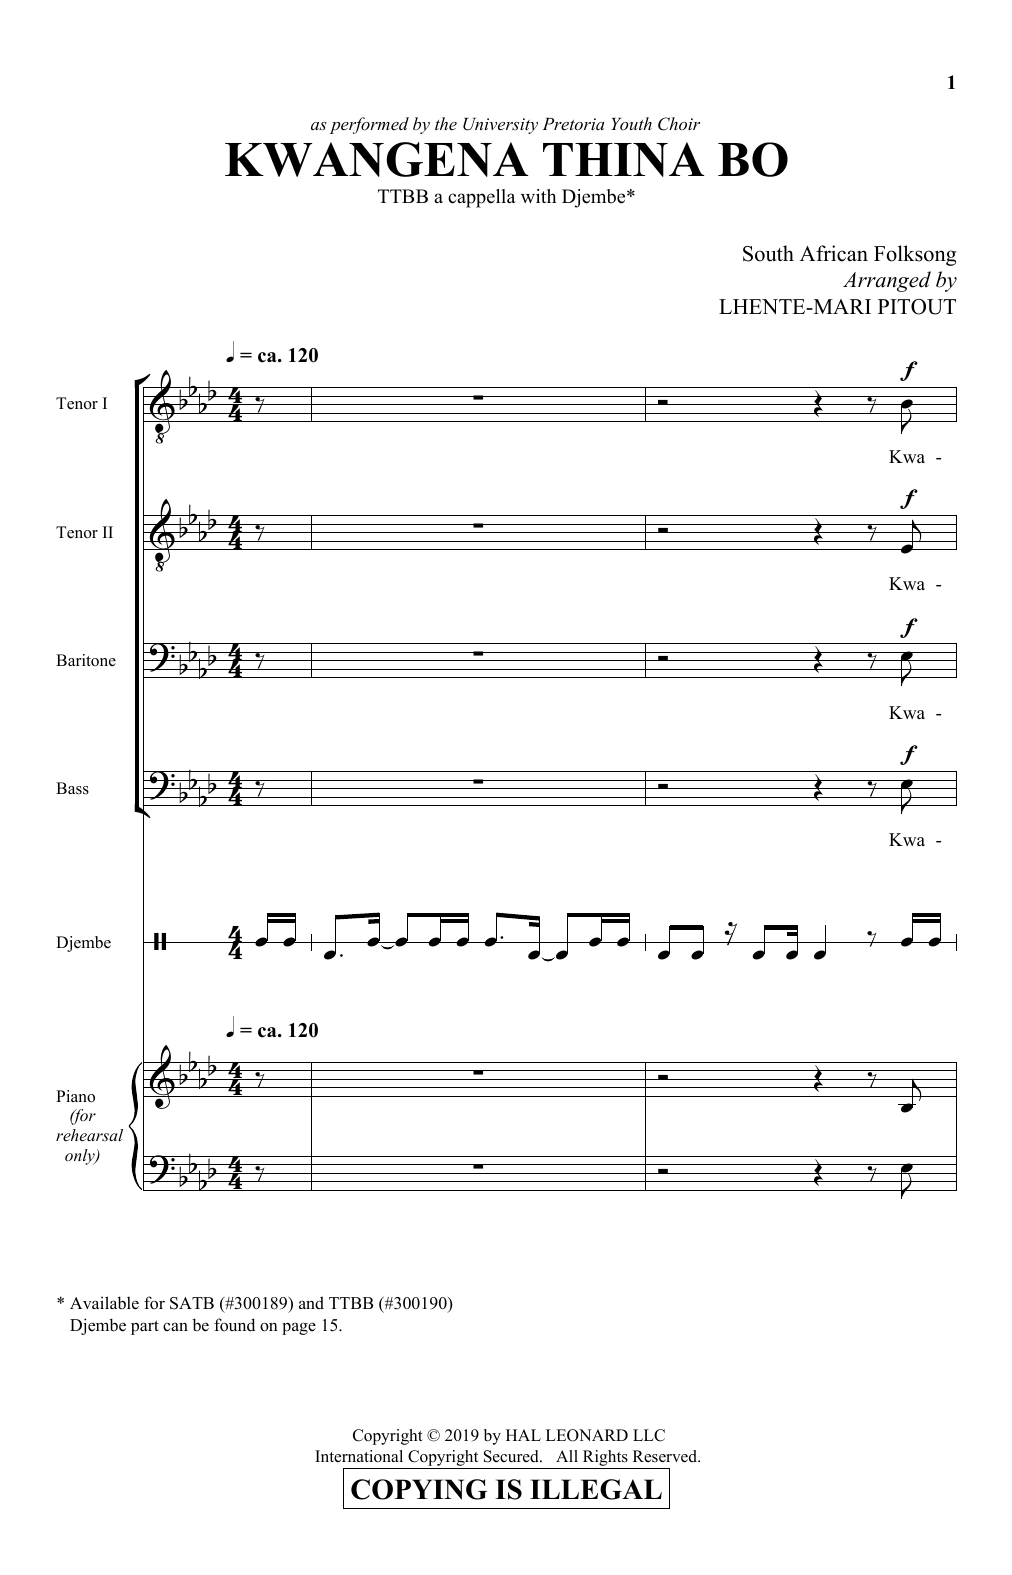 Traditional Xhosa Folk Song Kwangena Thina Bo (arr. Lhente-Mari Pitout) Sheet Music Notes & Chords for SATB Choir - Download or Print PDF